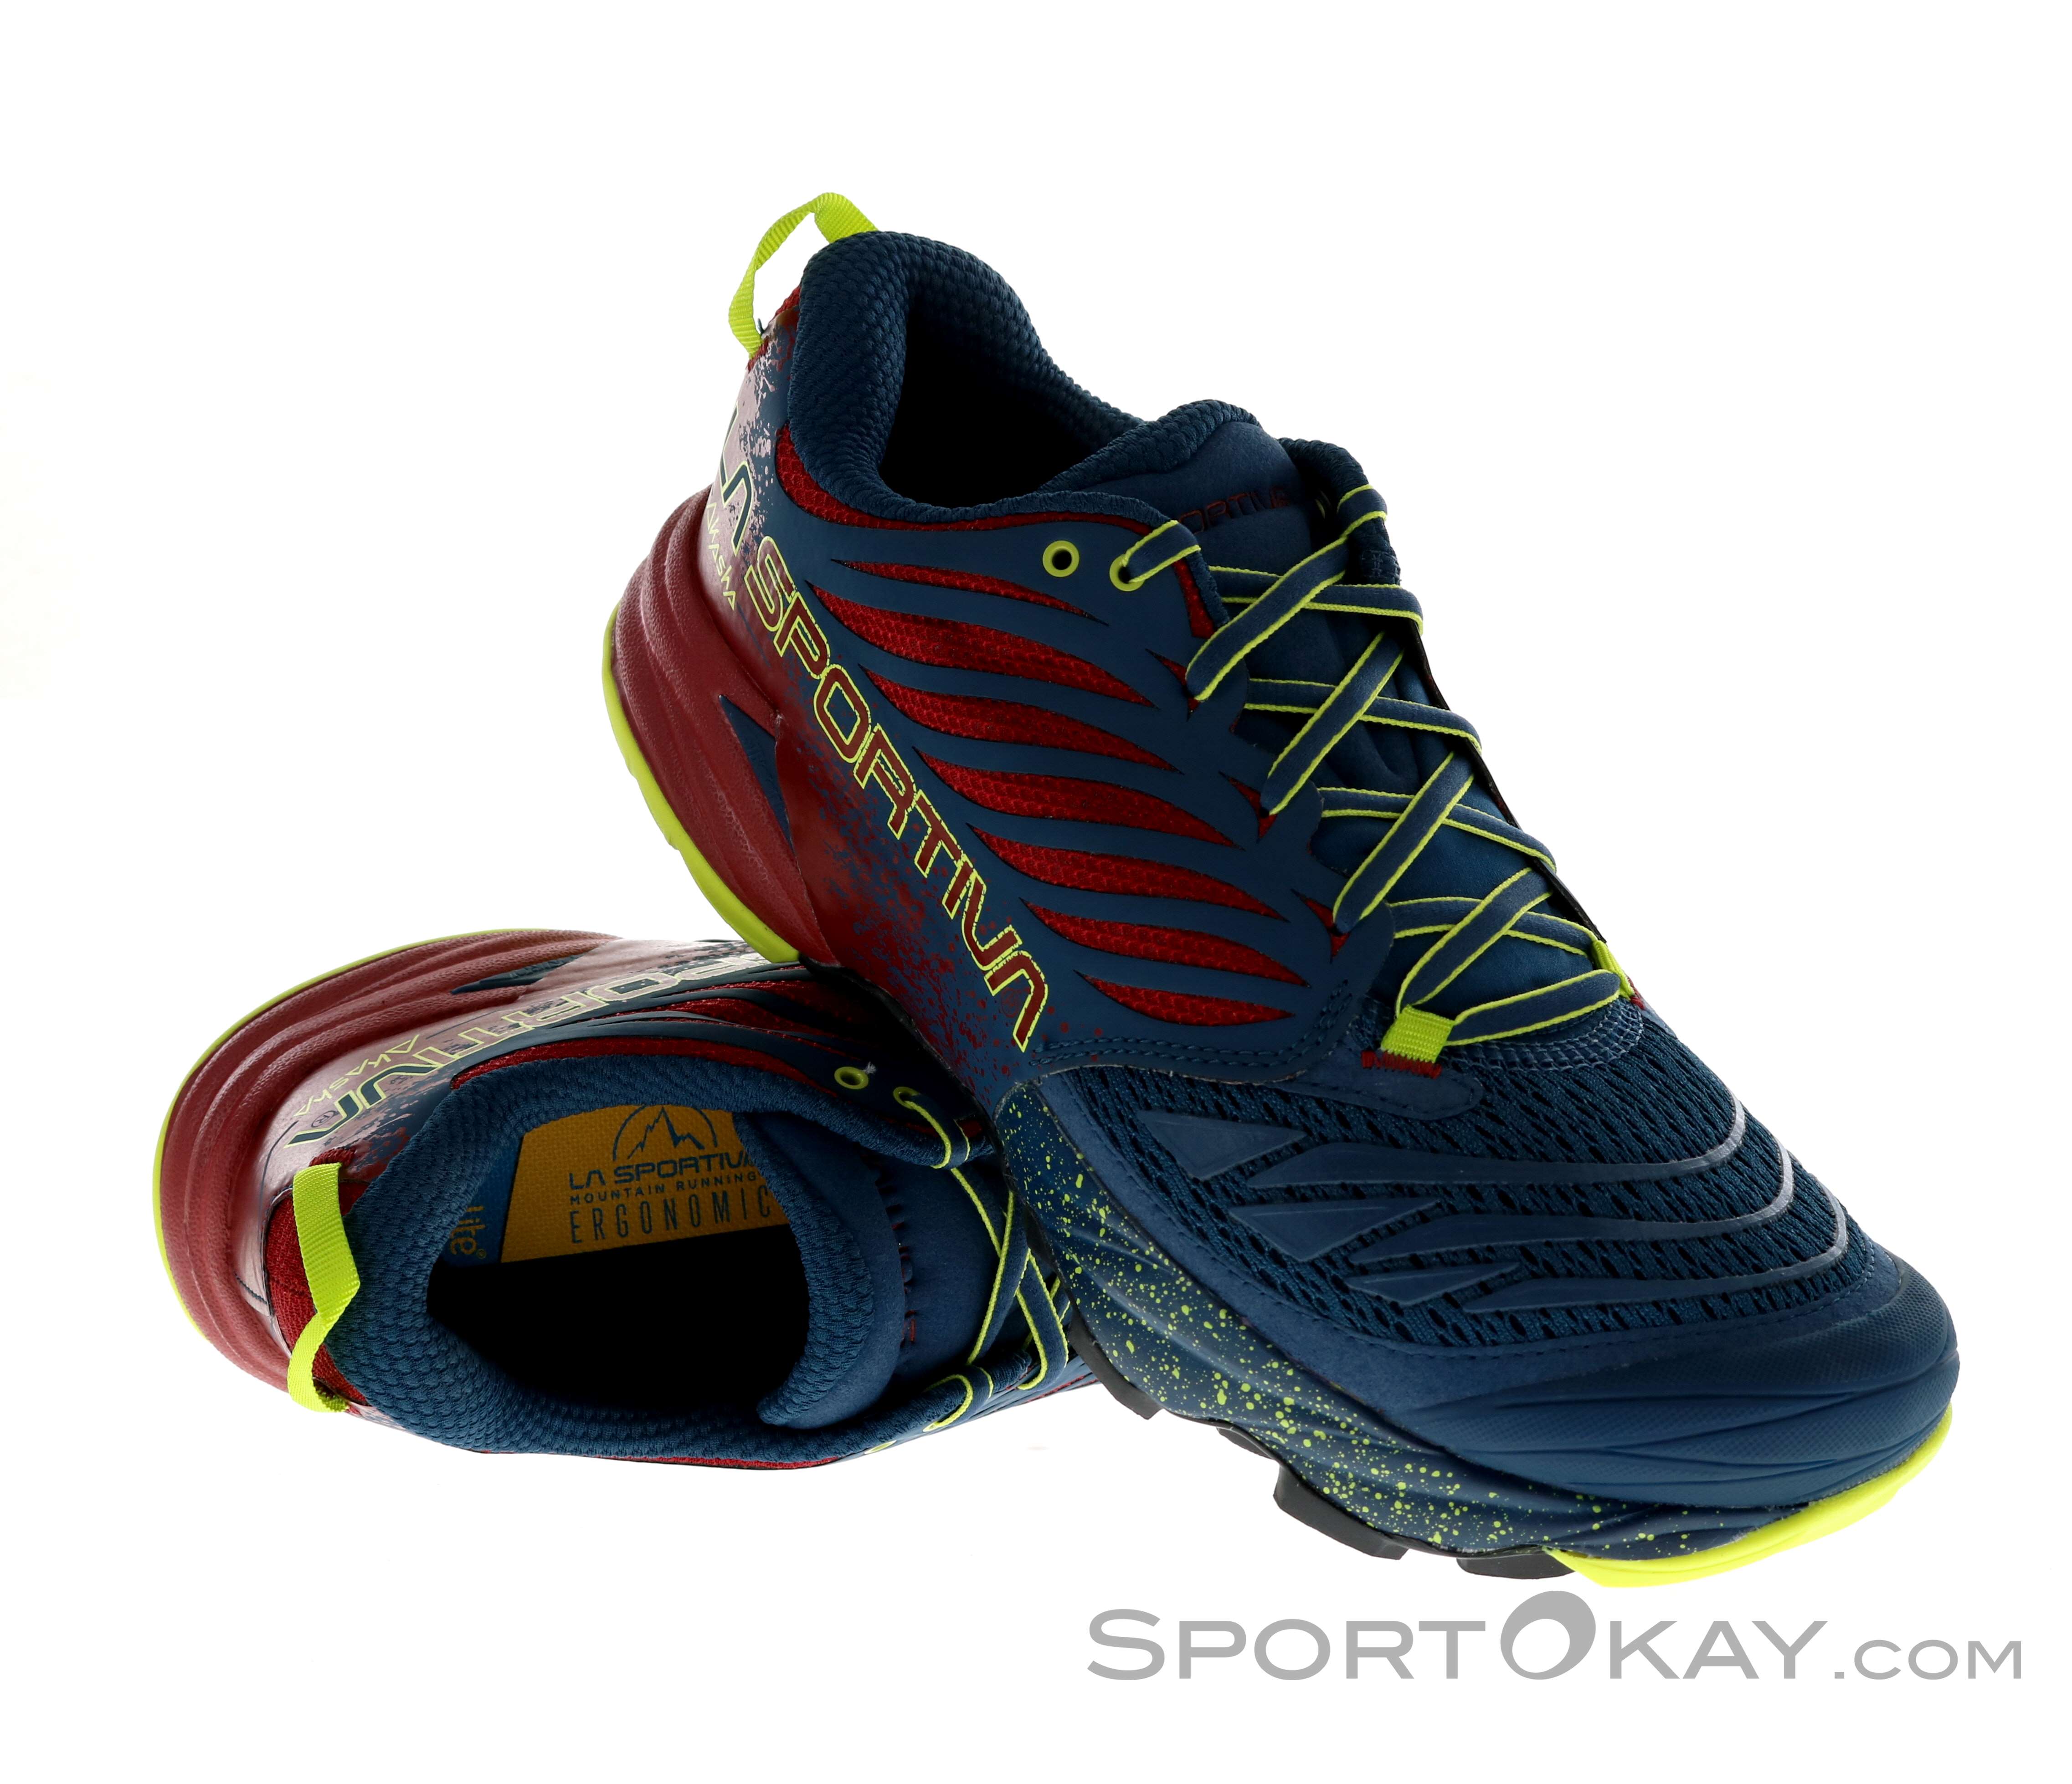 ultra marathon trail shoes